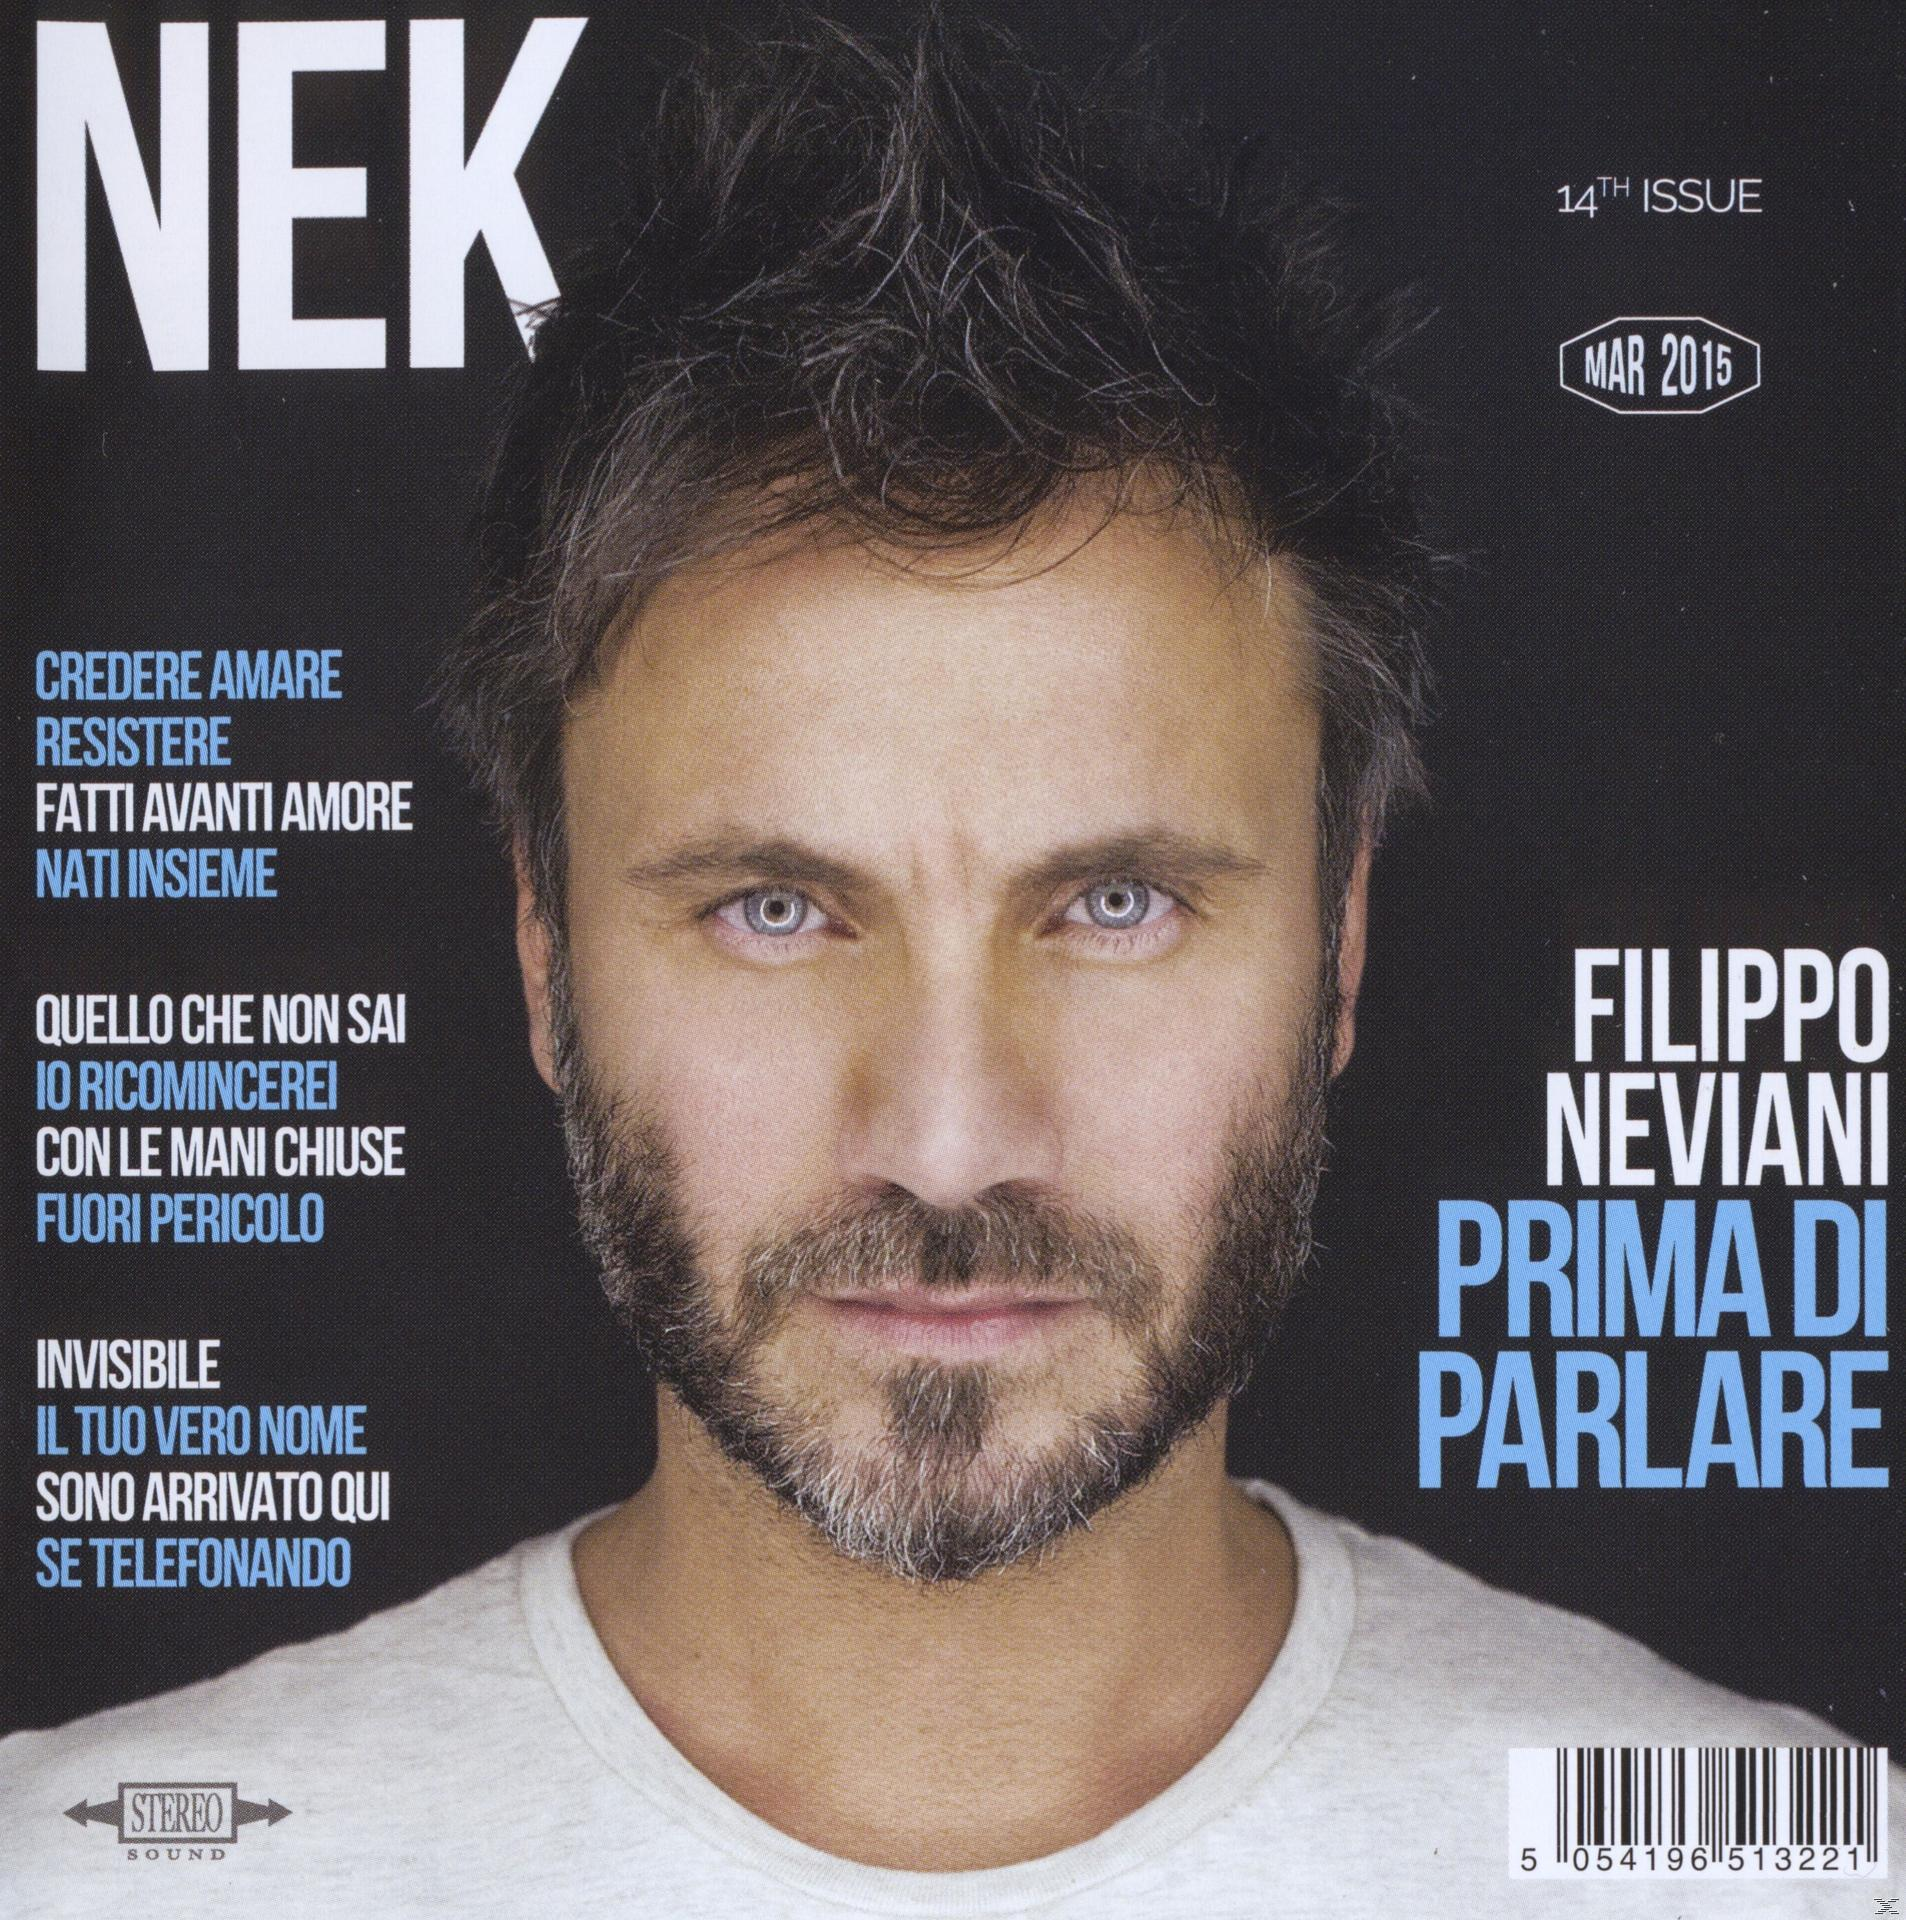 Nek - - Di Prima (CD) Parlare